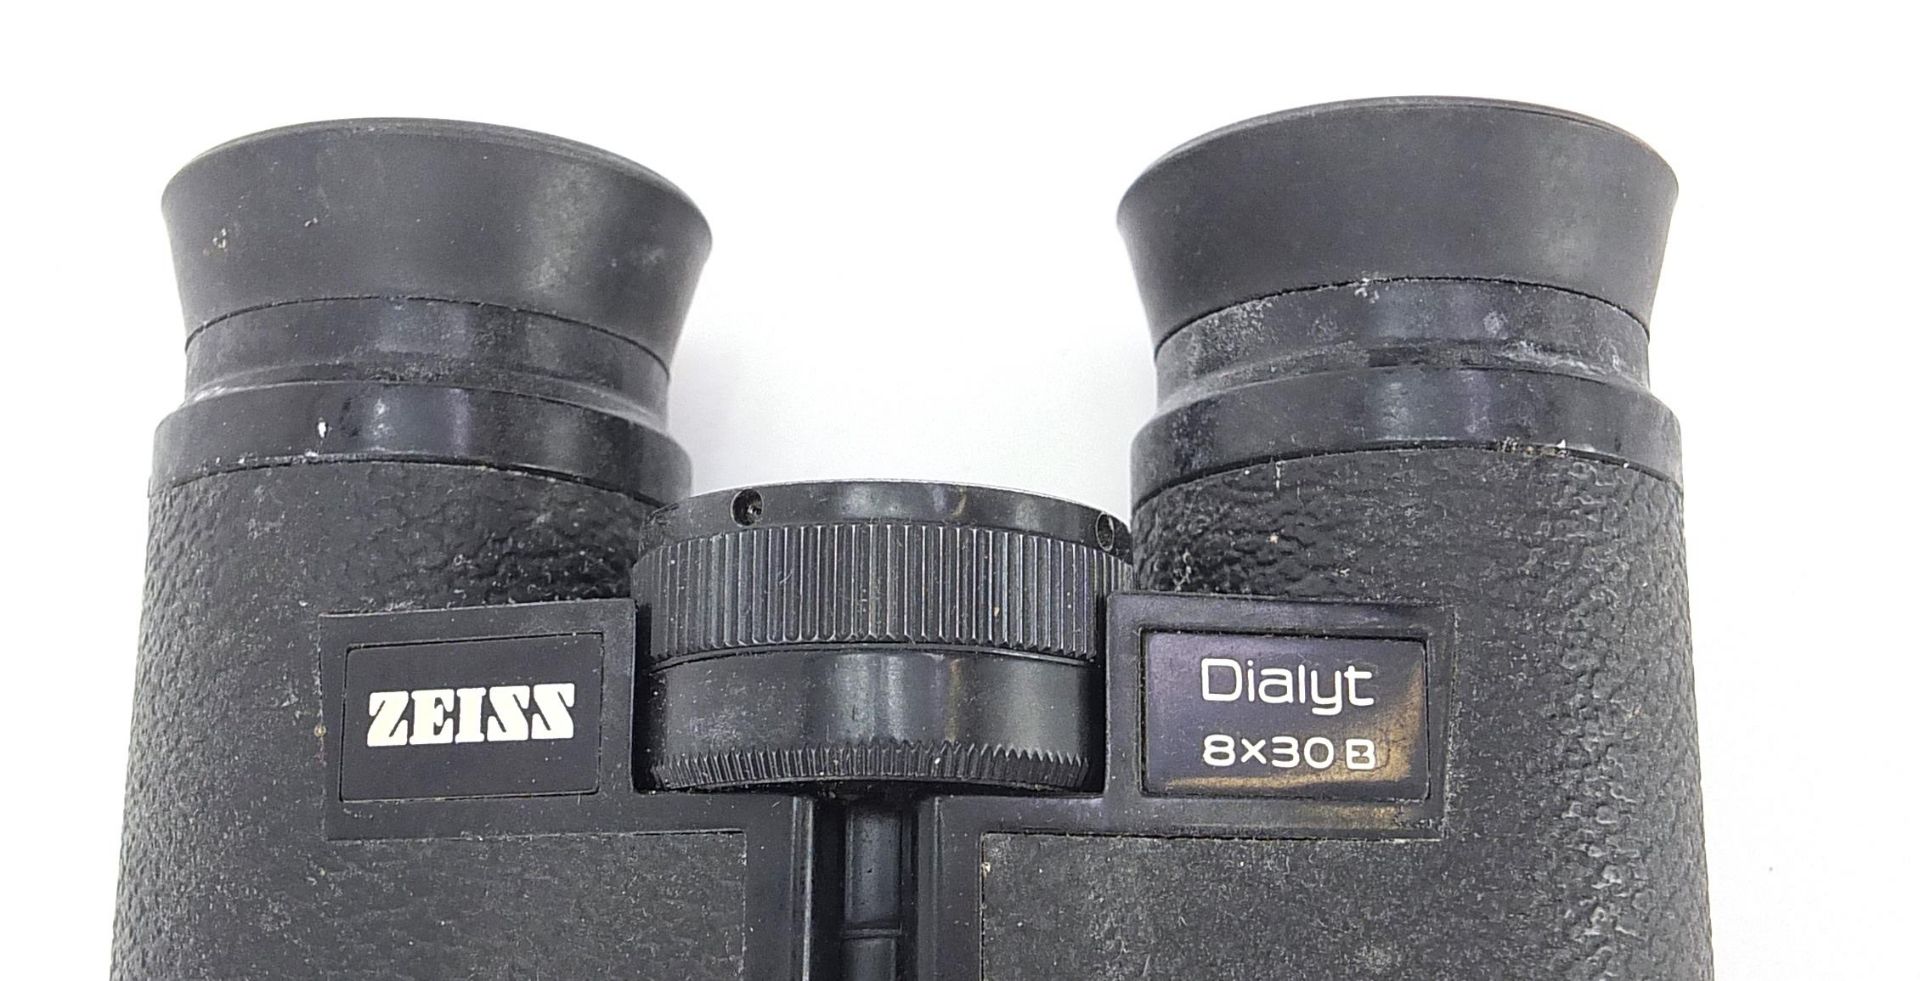 Pair of West German Zeiss Dialyt binoculars, 8 x 30 B with case - Image 4 of 4